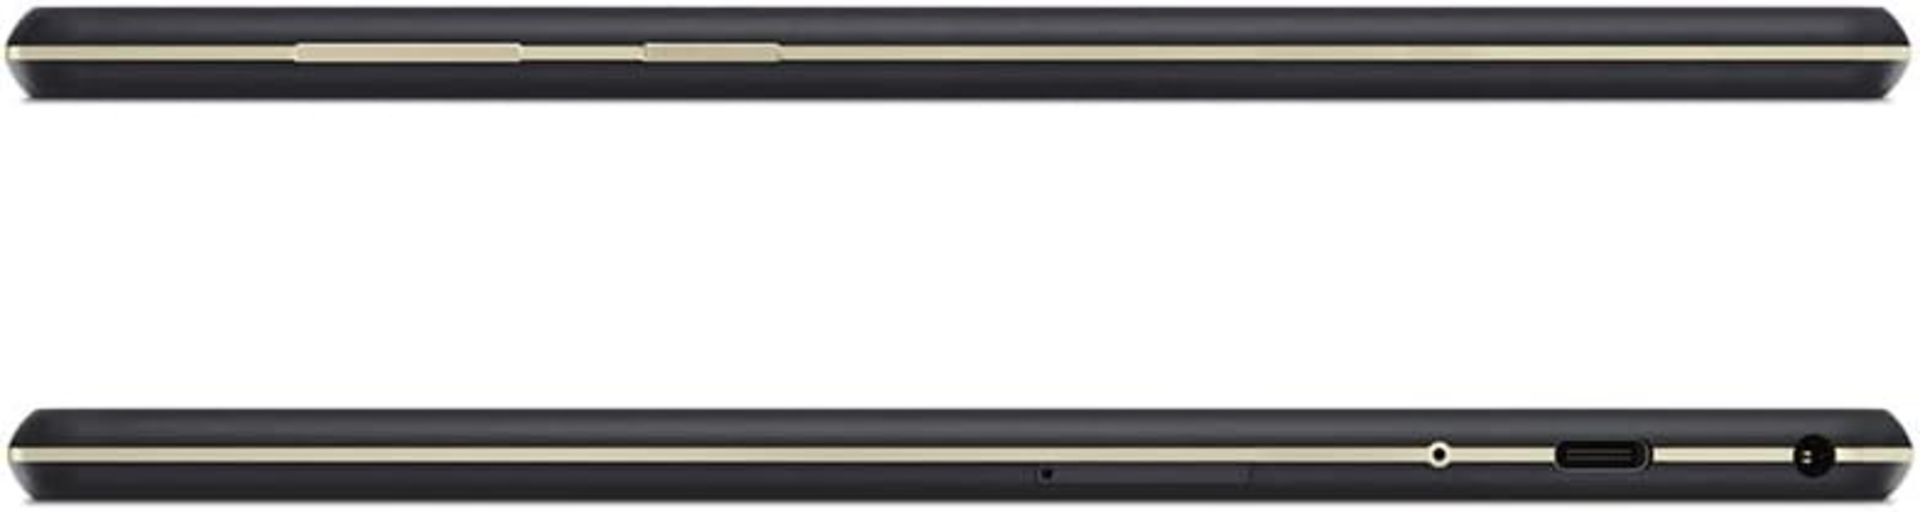 BRAND NEW FACTORY SEALED LENOVO Tab M10 HD Tablet. RRP £179.99. Memory: 32 GB. RAM: 3 GB. Screen - Image 4 of 5